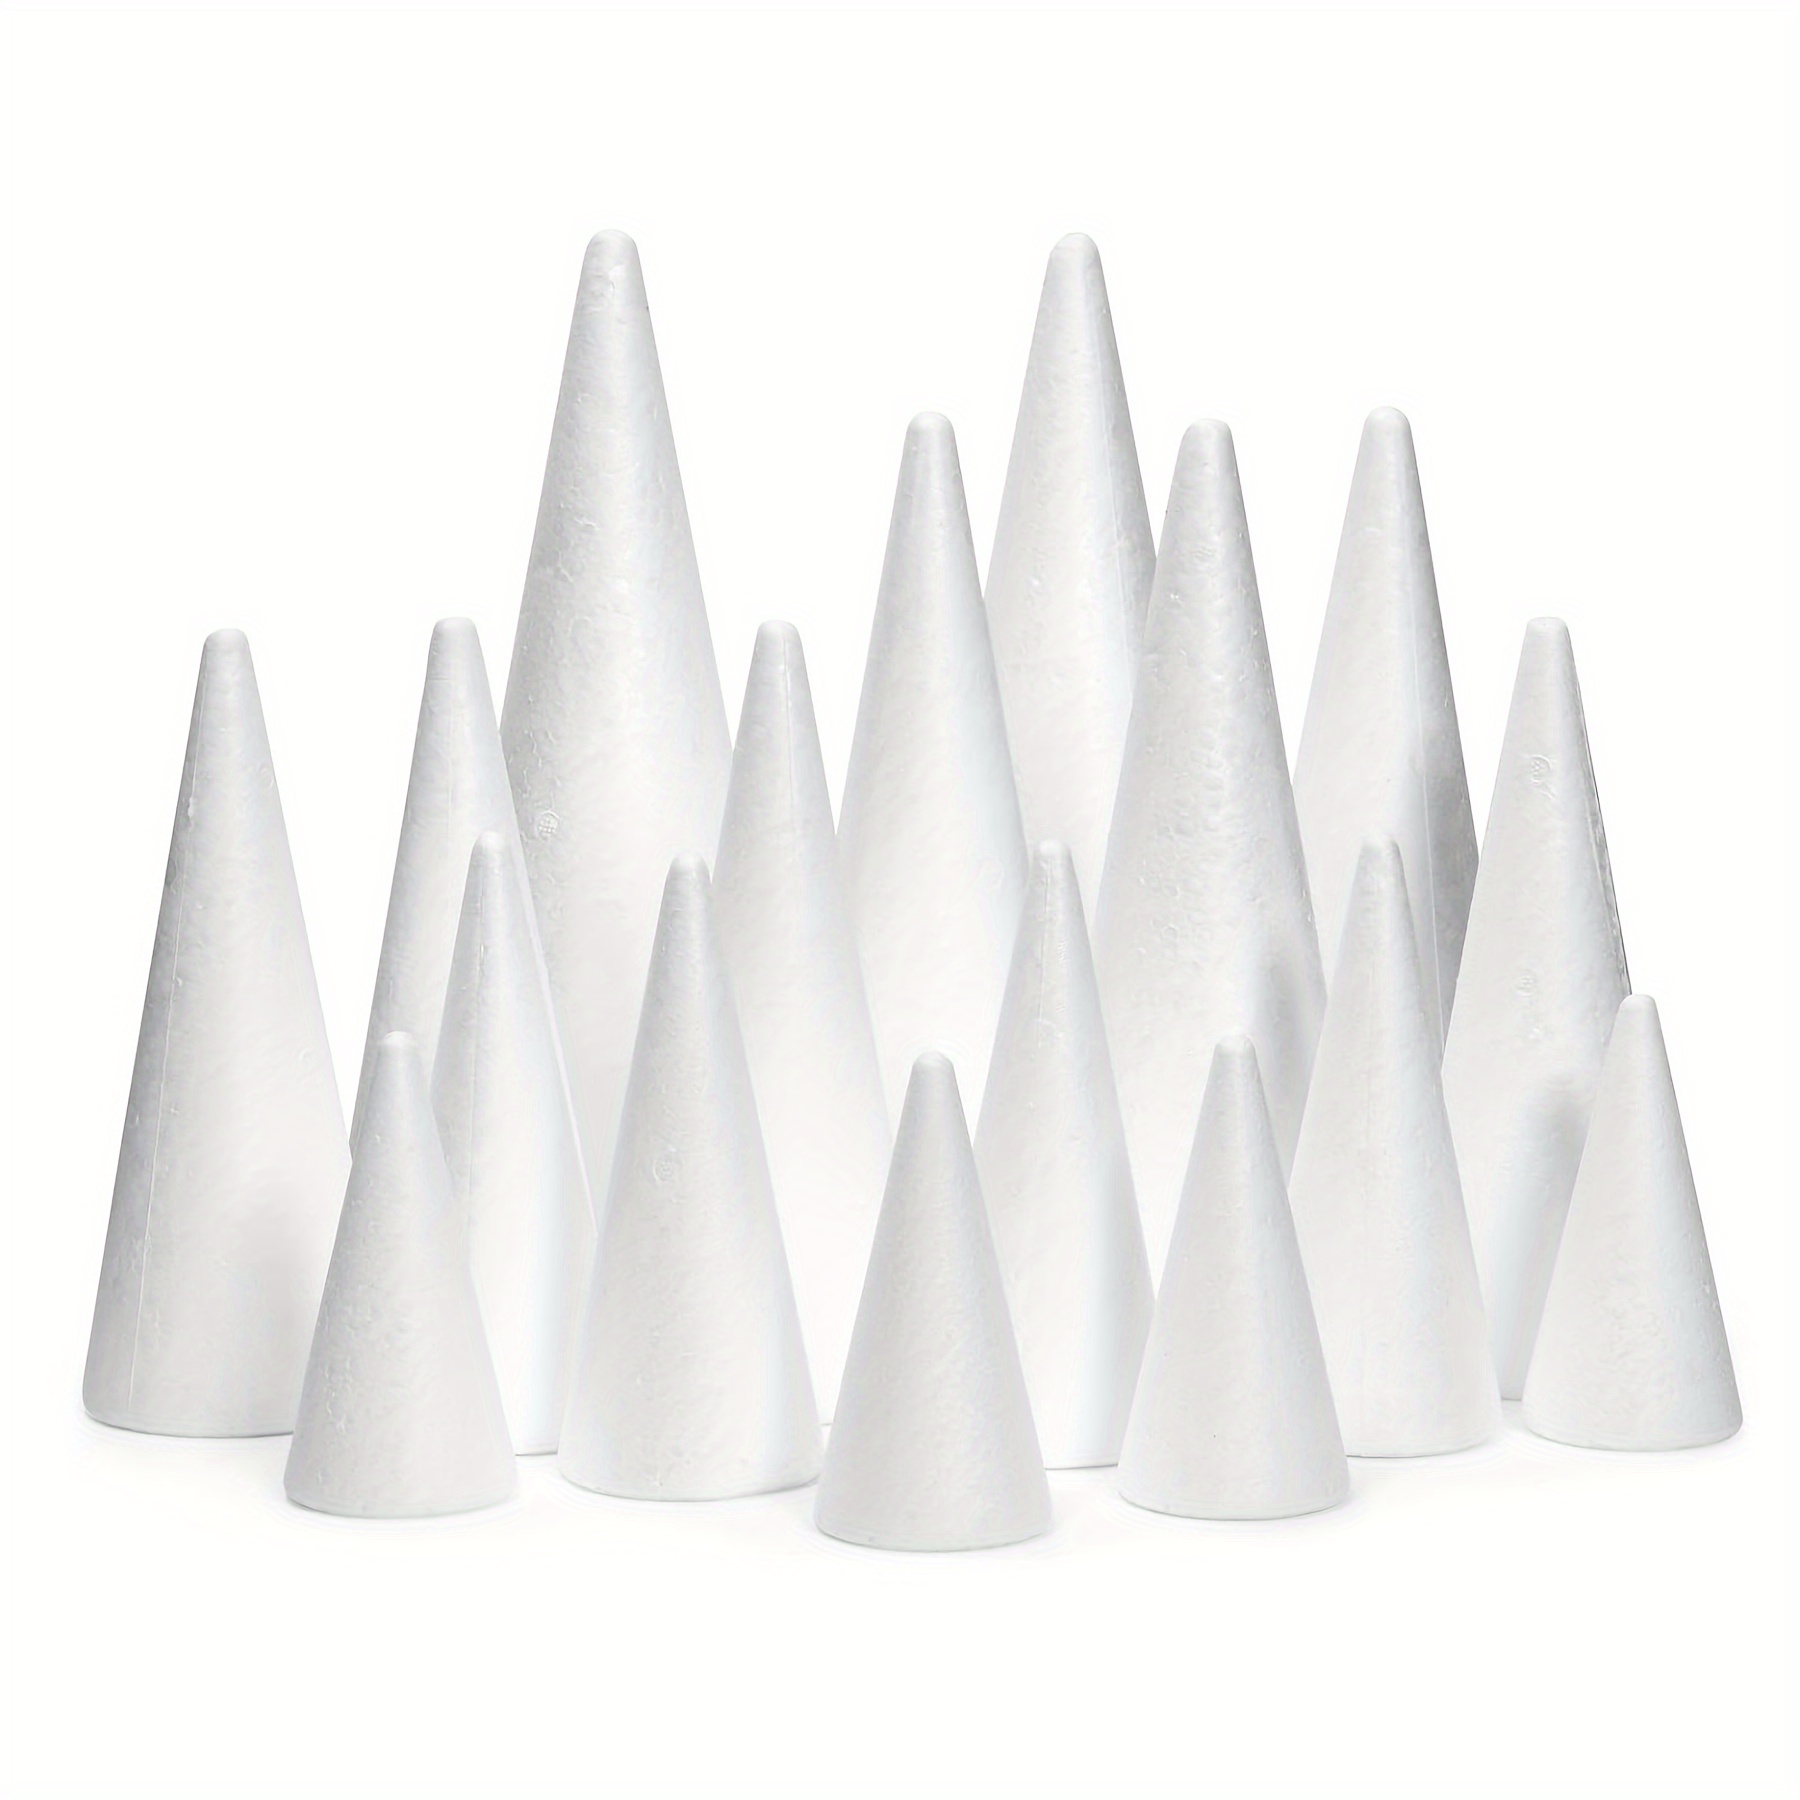 30Pcs cones Cone- shaped Foams Handmade Polystyrene Toys Ornament